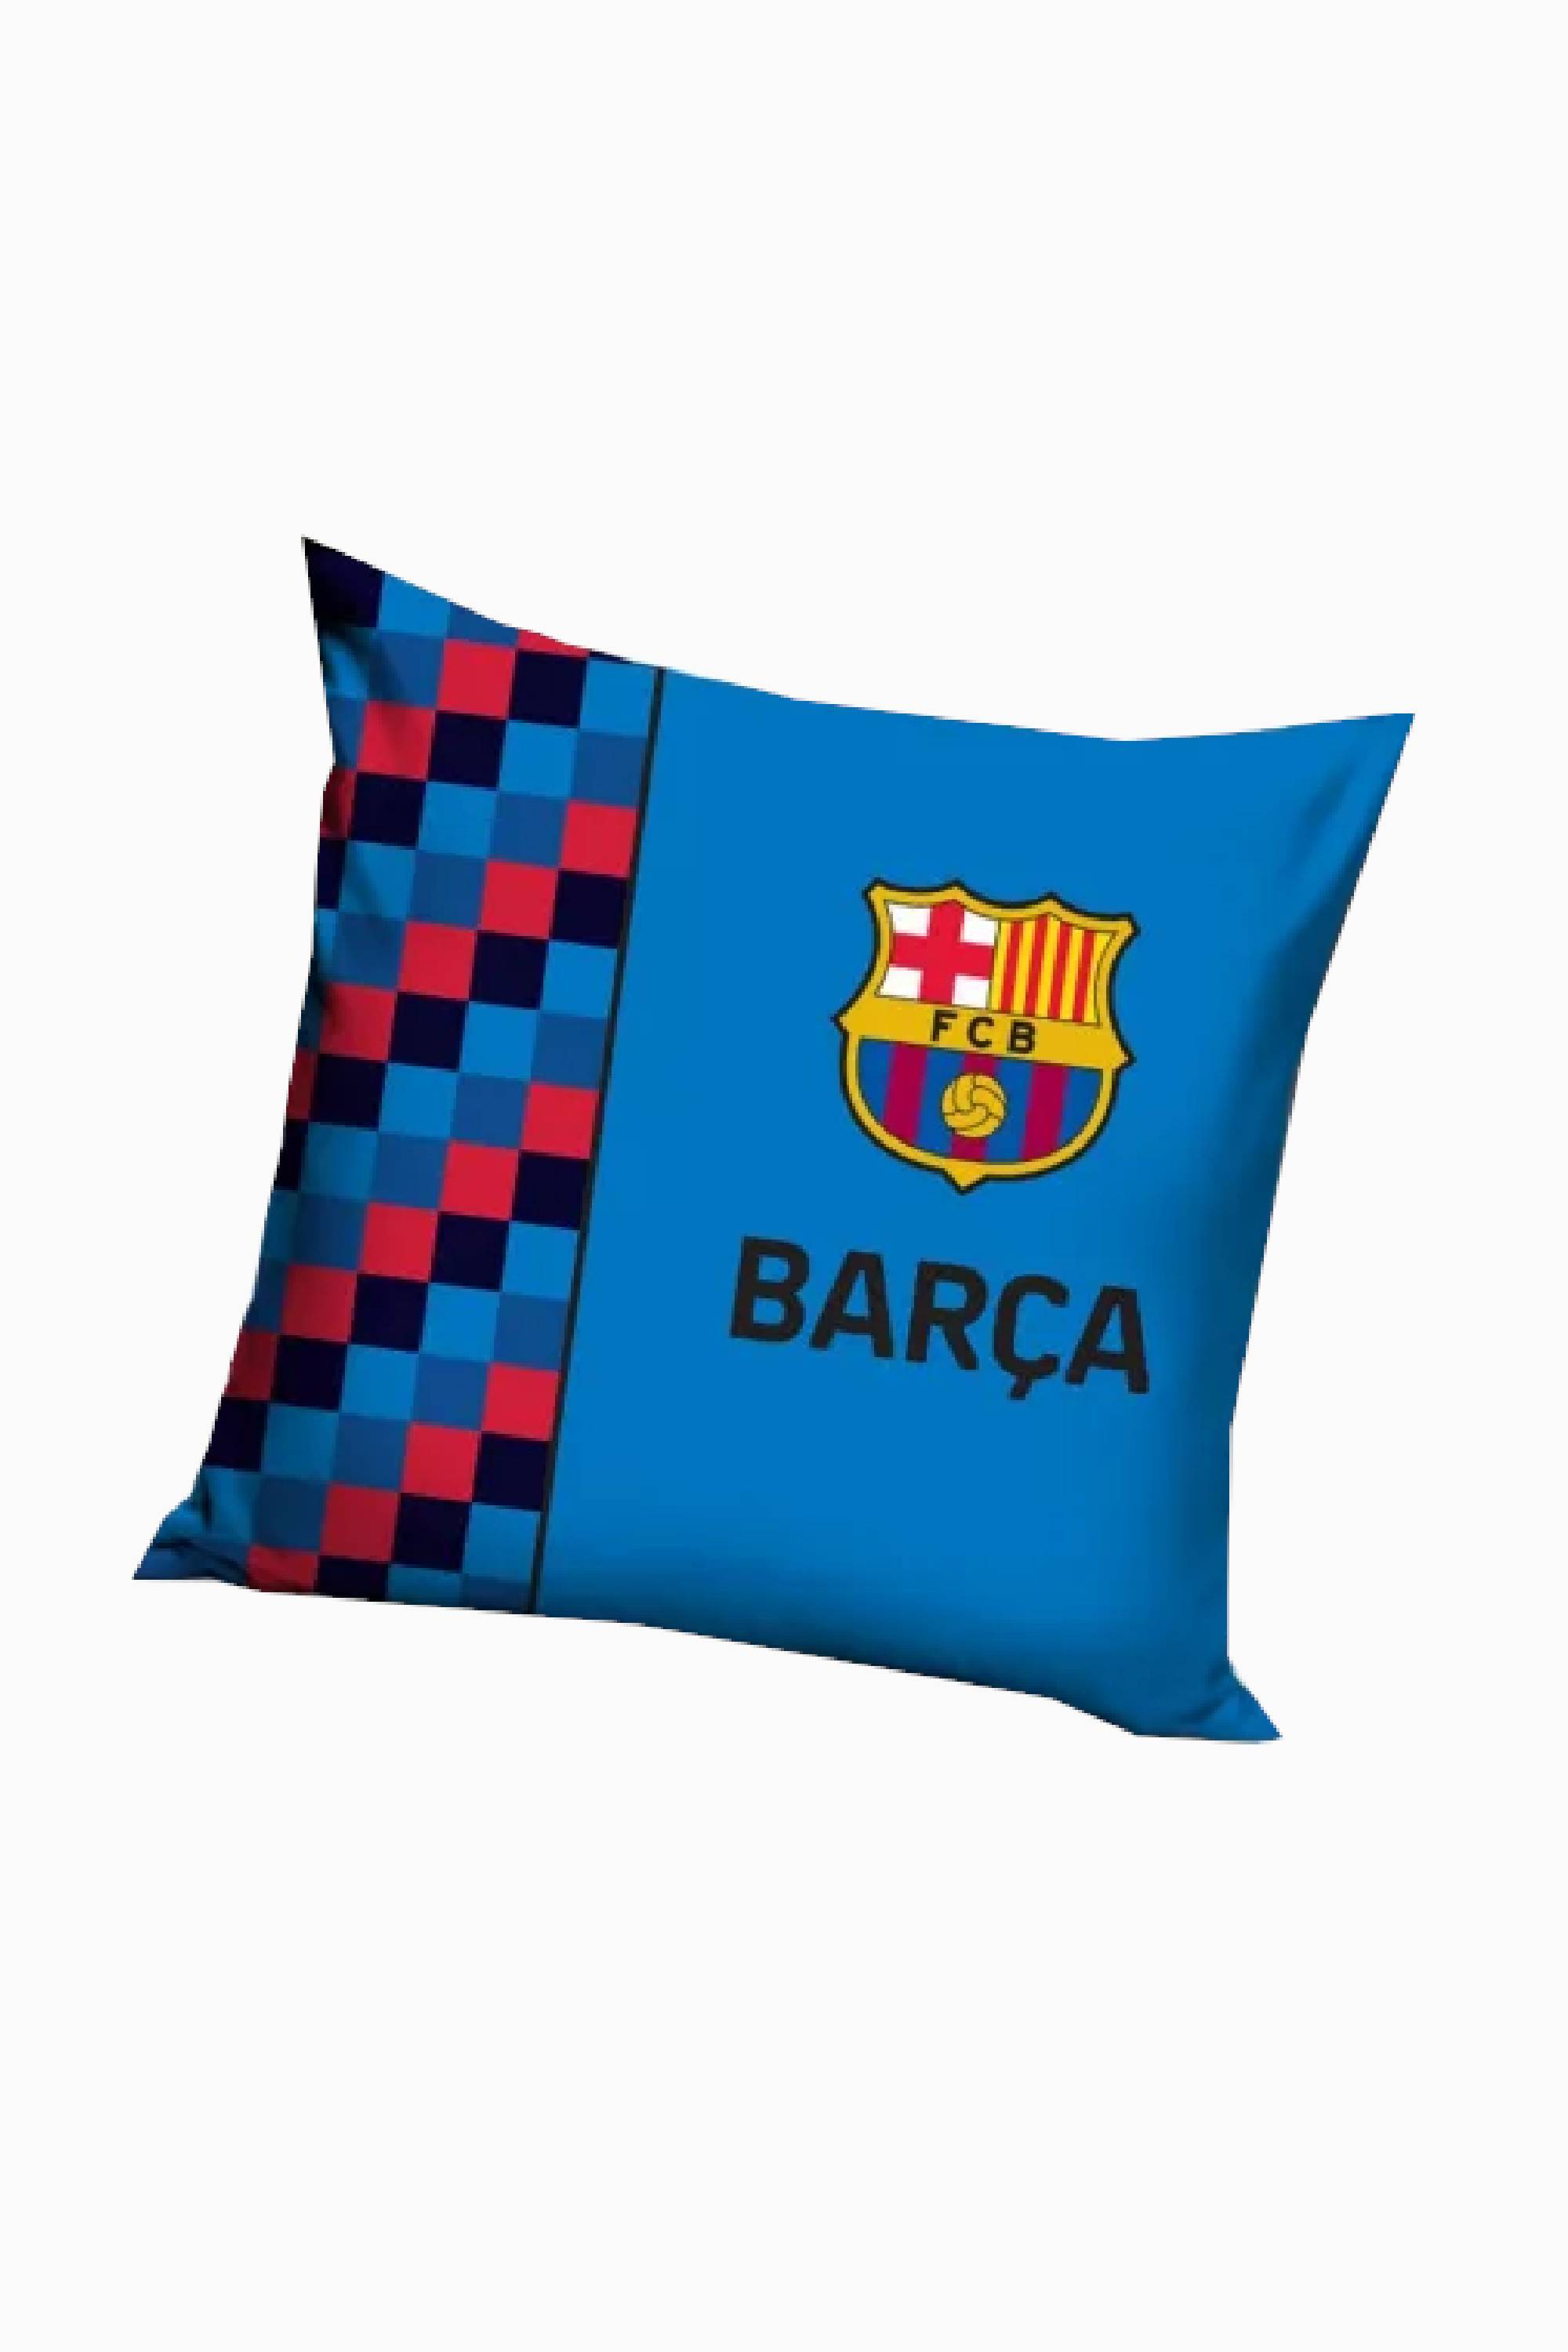 FC Barcelona Kissenbezug Handtuch Kissen Gästehandtuch Kissenhülle Barca FCB 